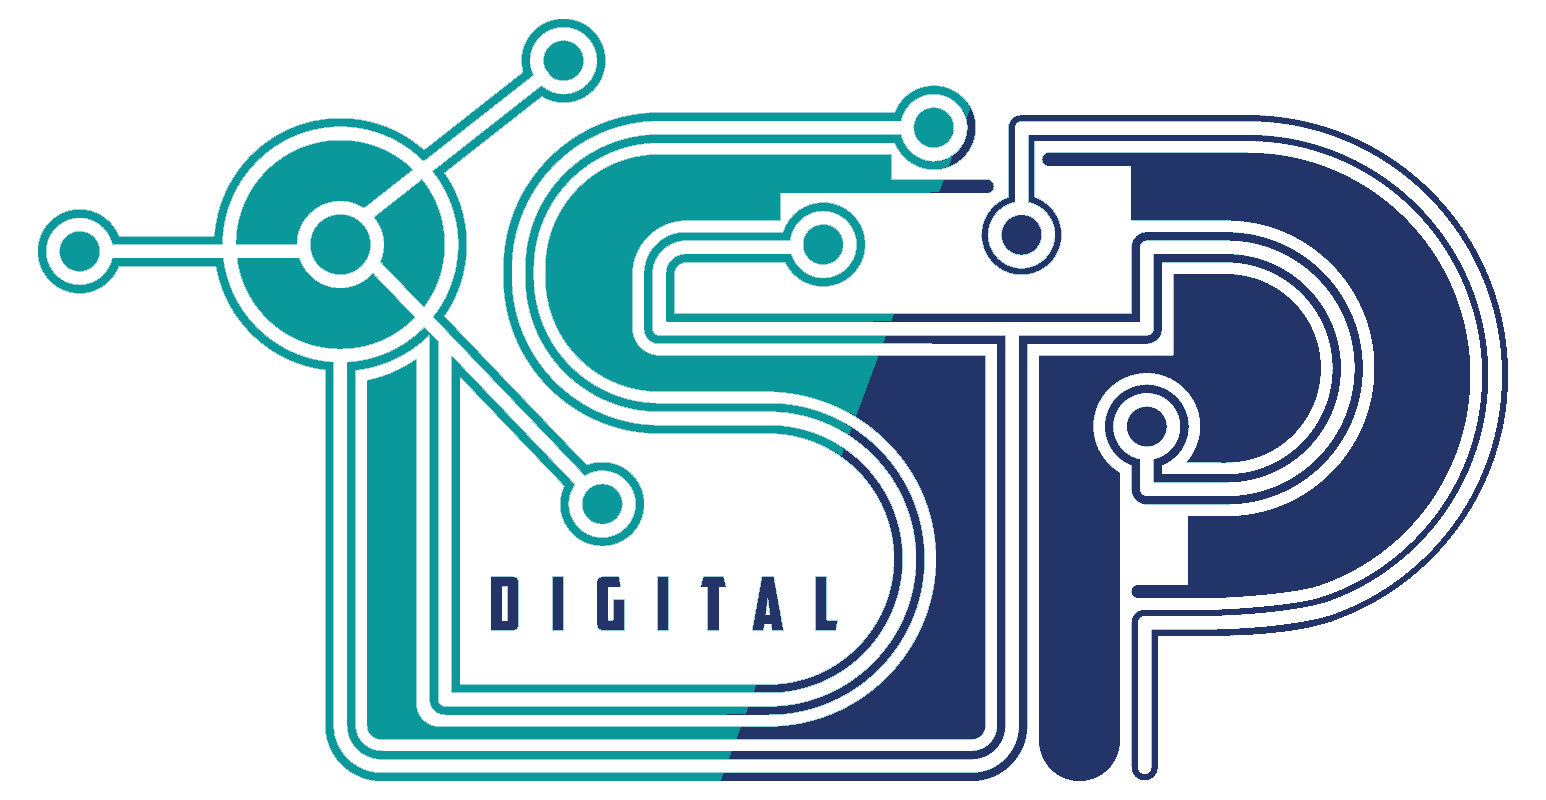   Digital ideas ltd-logo